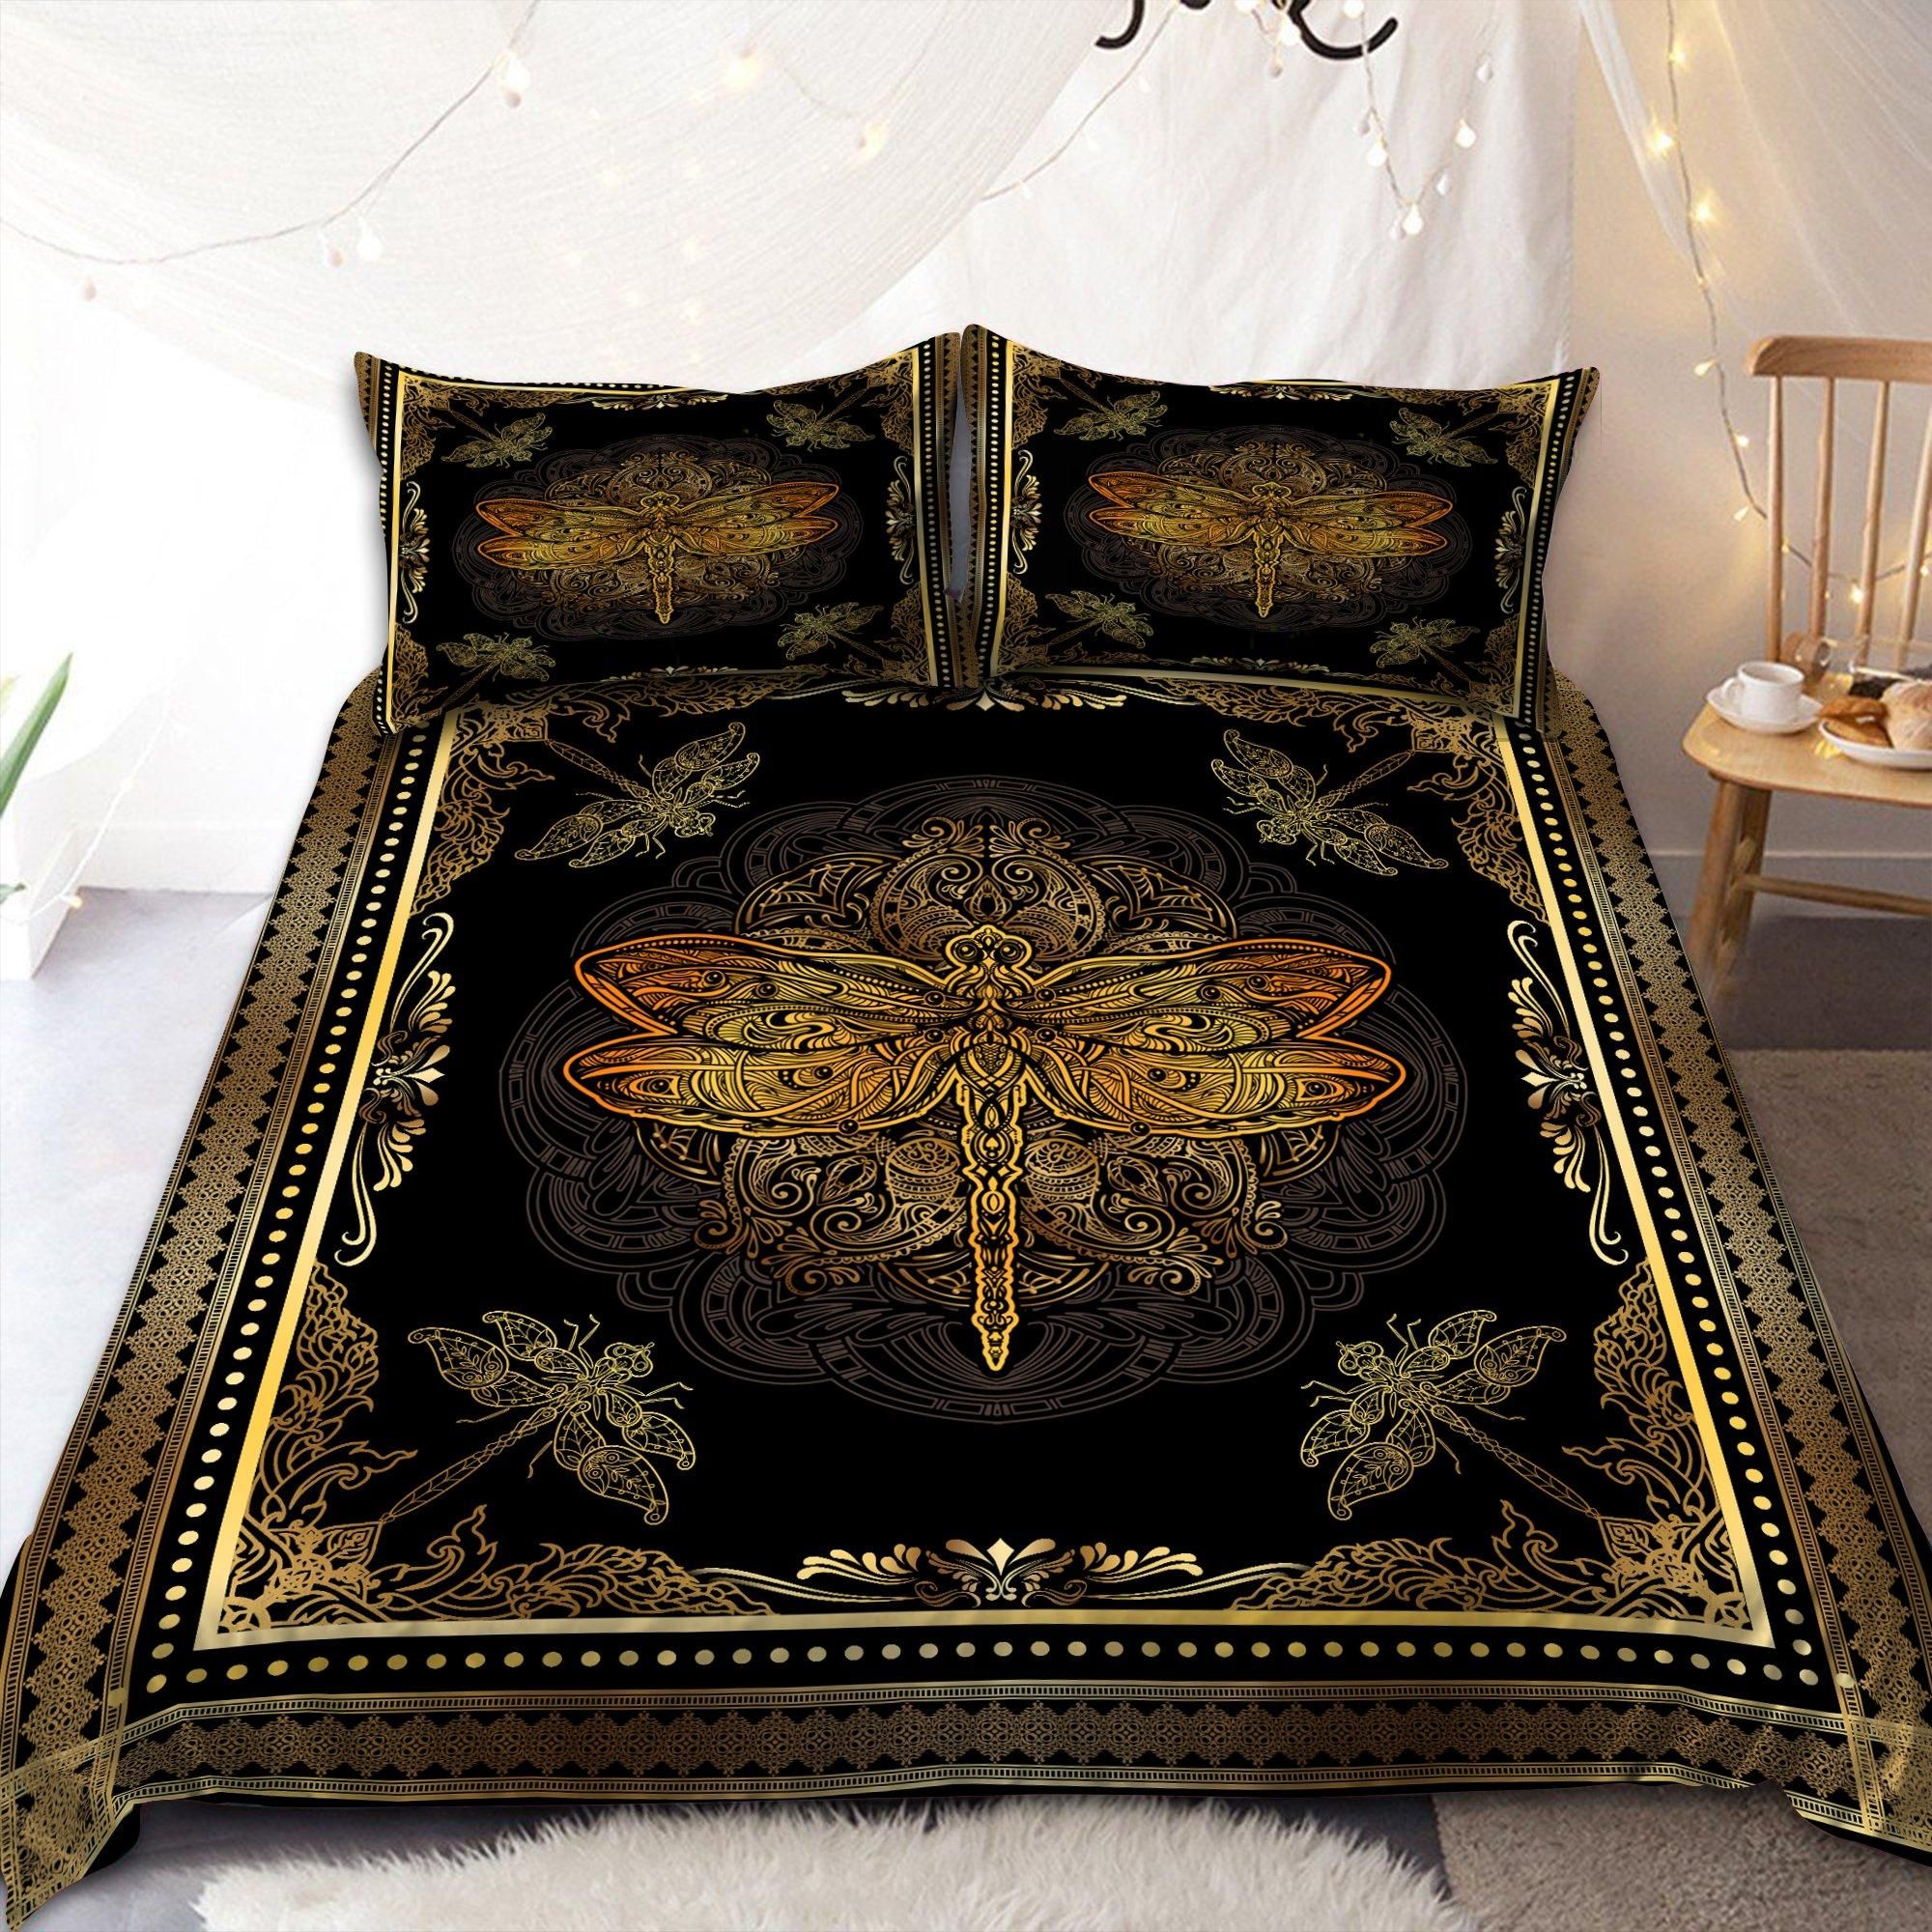 Dragonfly Gold And Black Duvet Cover Bedding Set